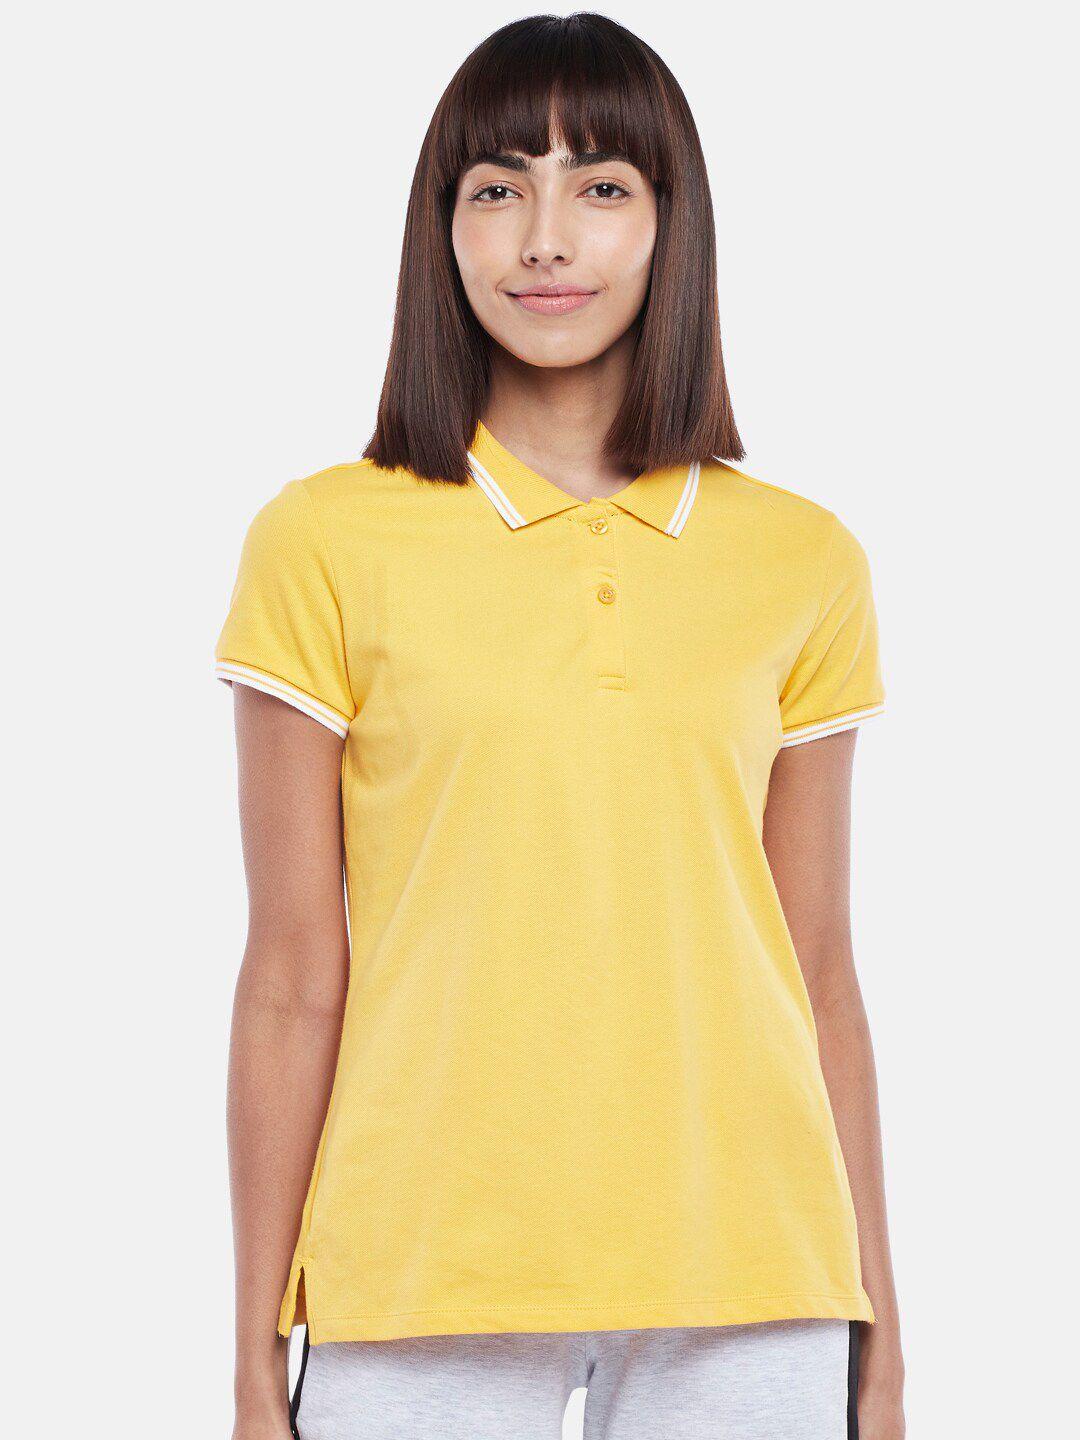 ajile by pantaloons women yellow t-shirt